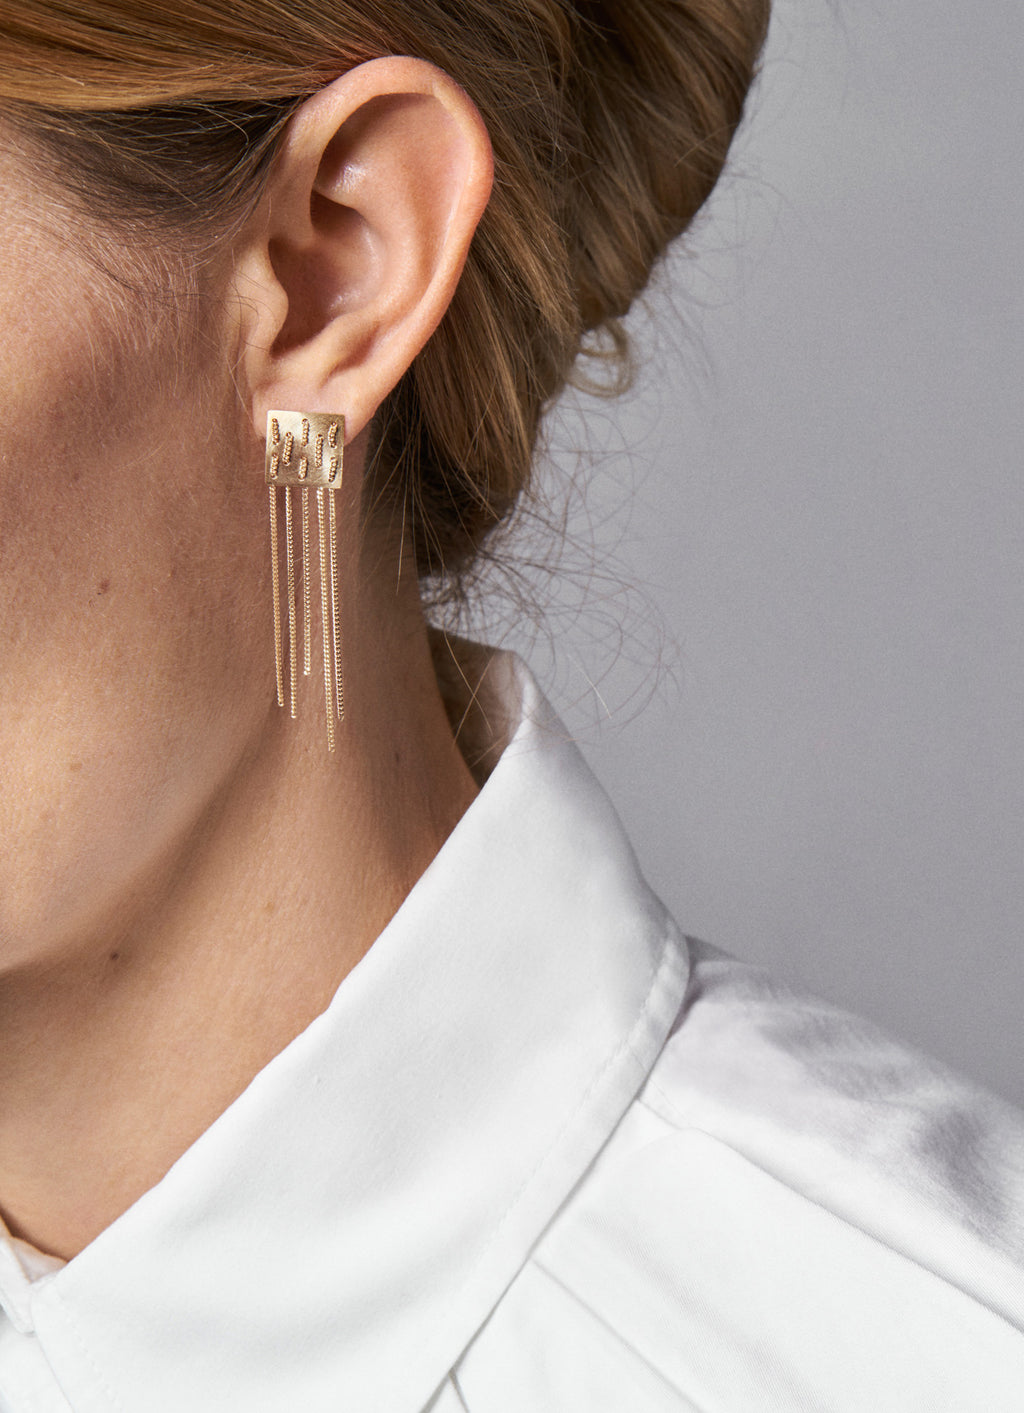 18KT yellow gold chained earrings worn by a female ear - Weave E